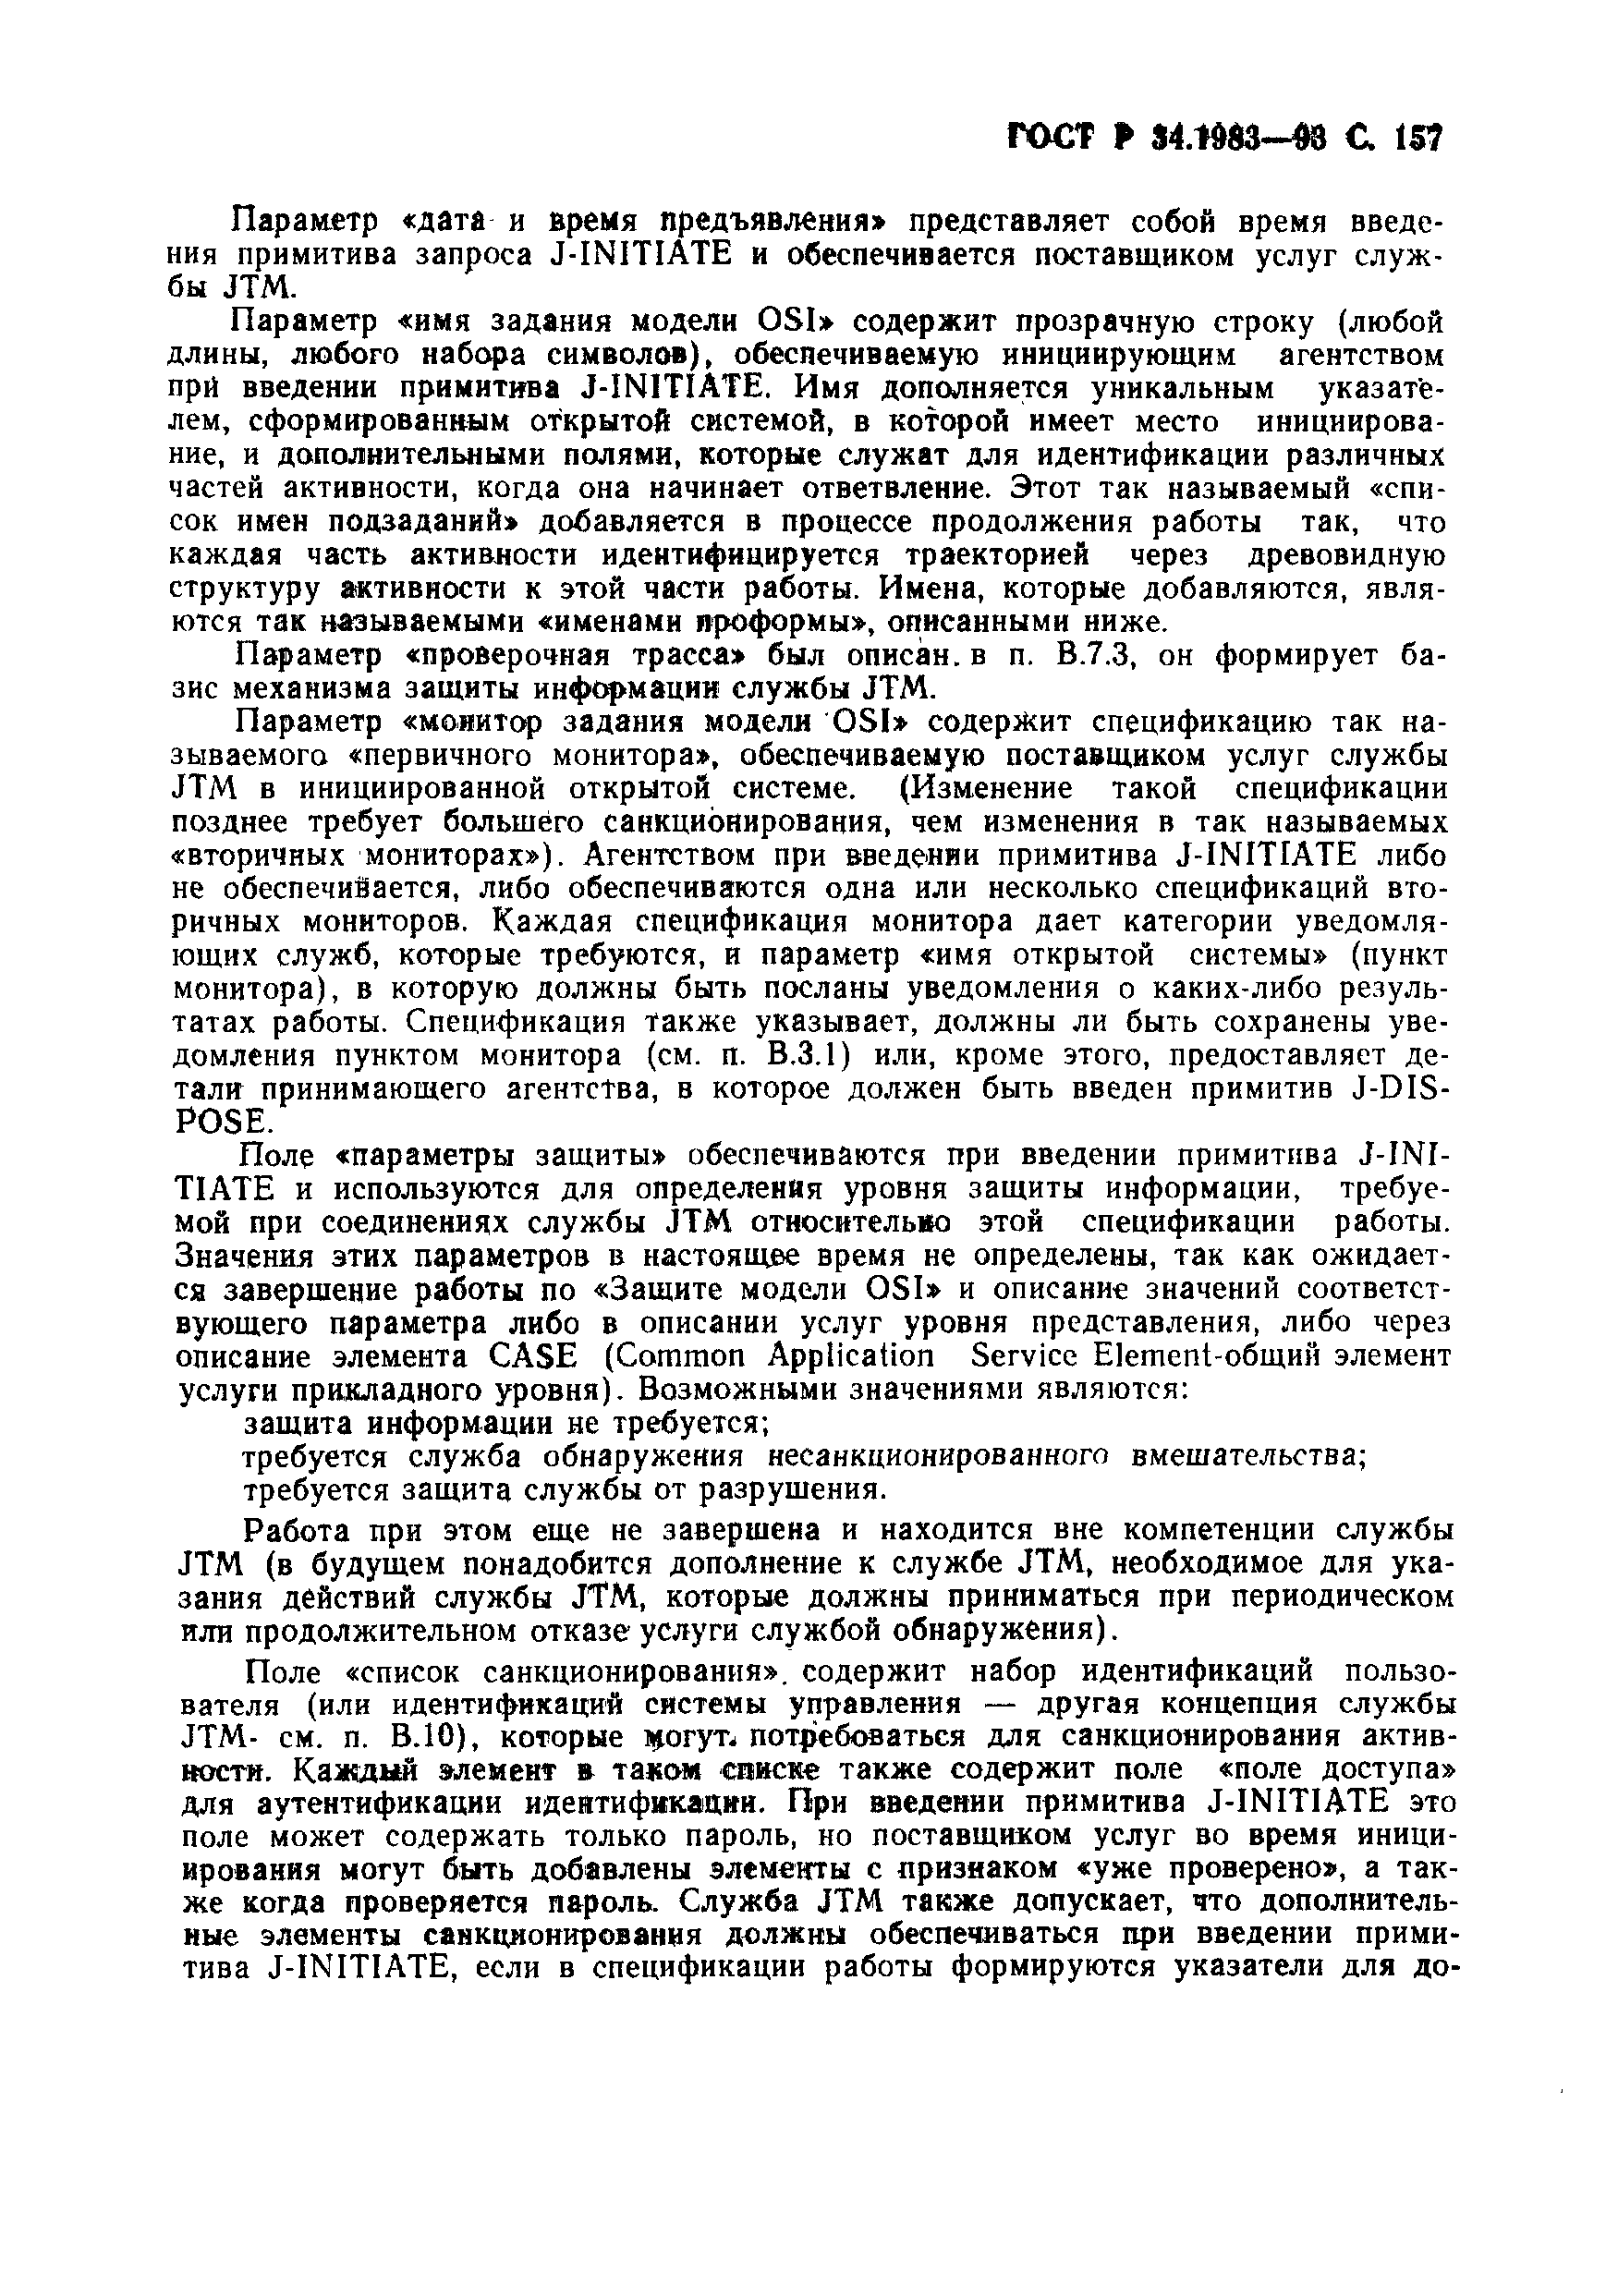 ГОСТ Р 34.1983-93. Страница 158